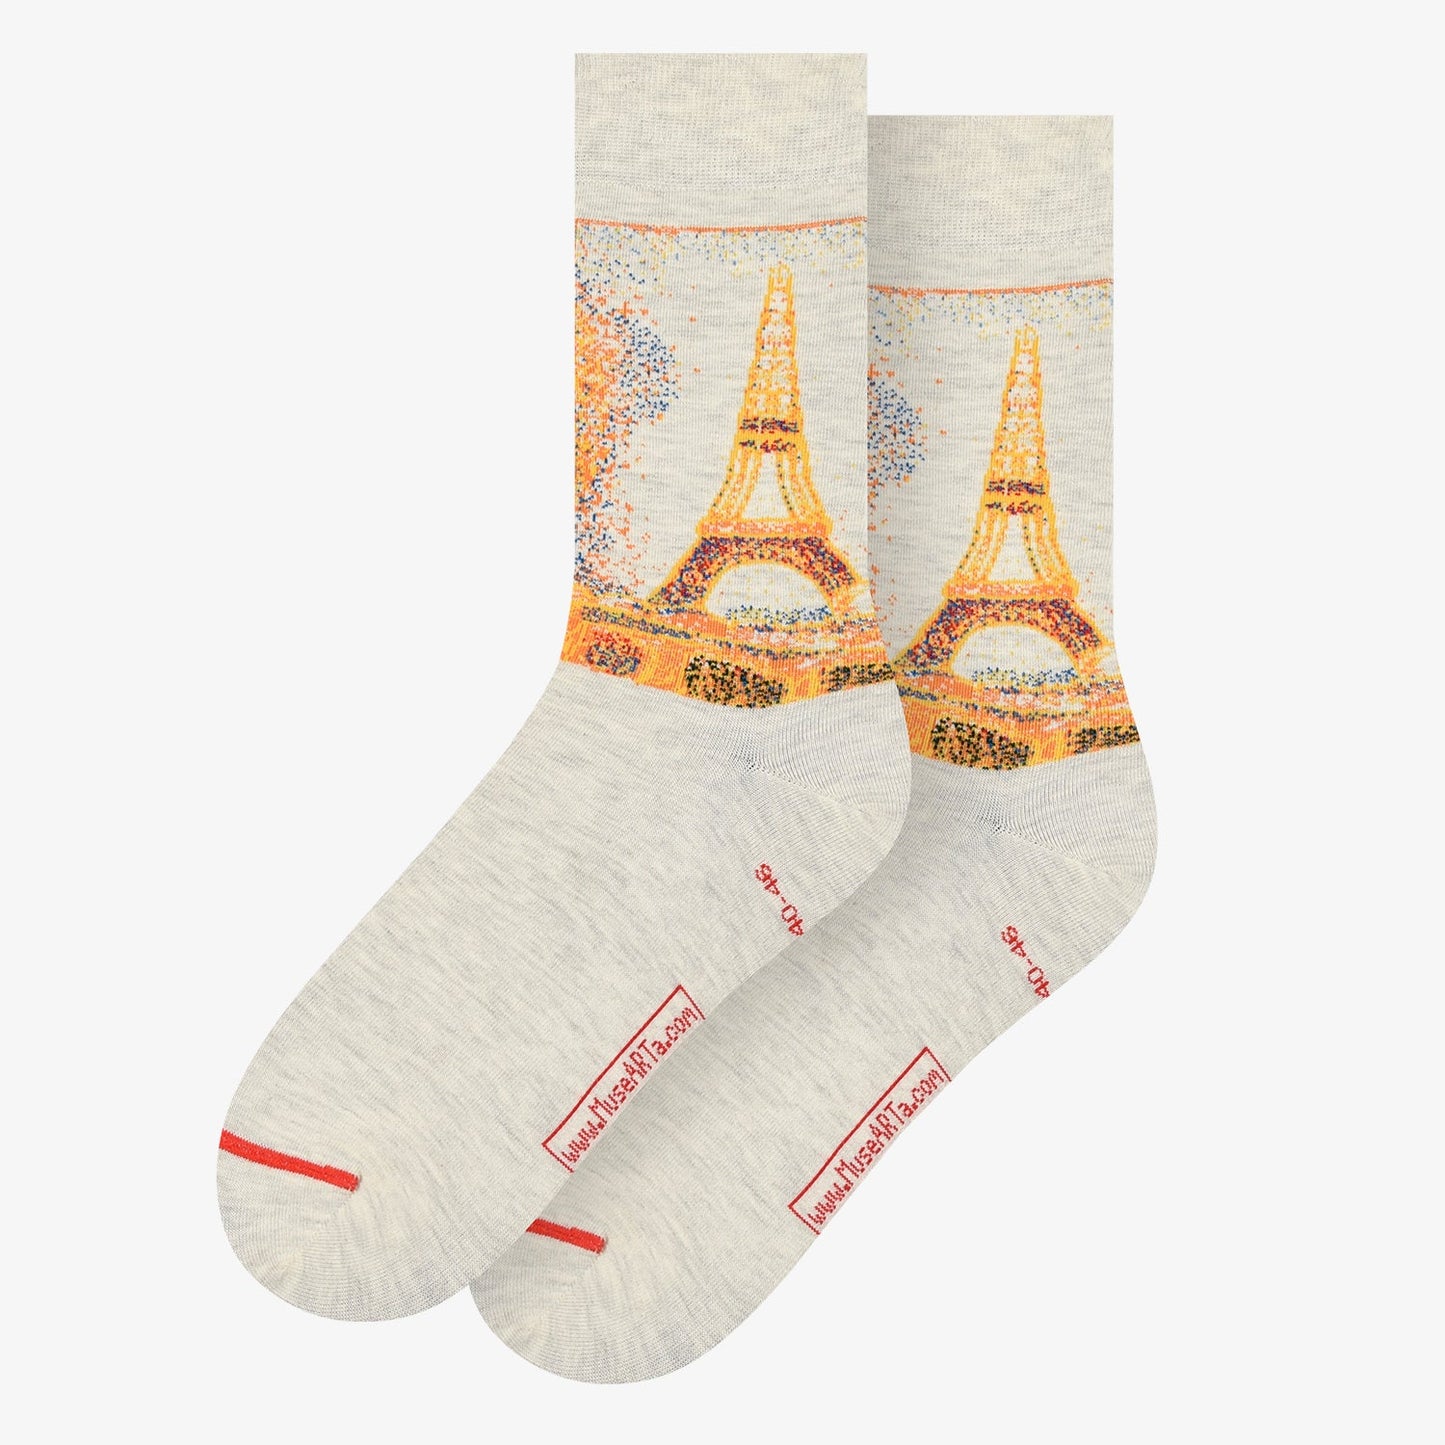 Georges Seurat Eiffel Tower Socks